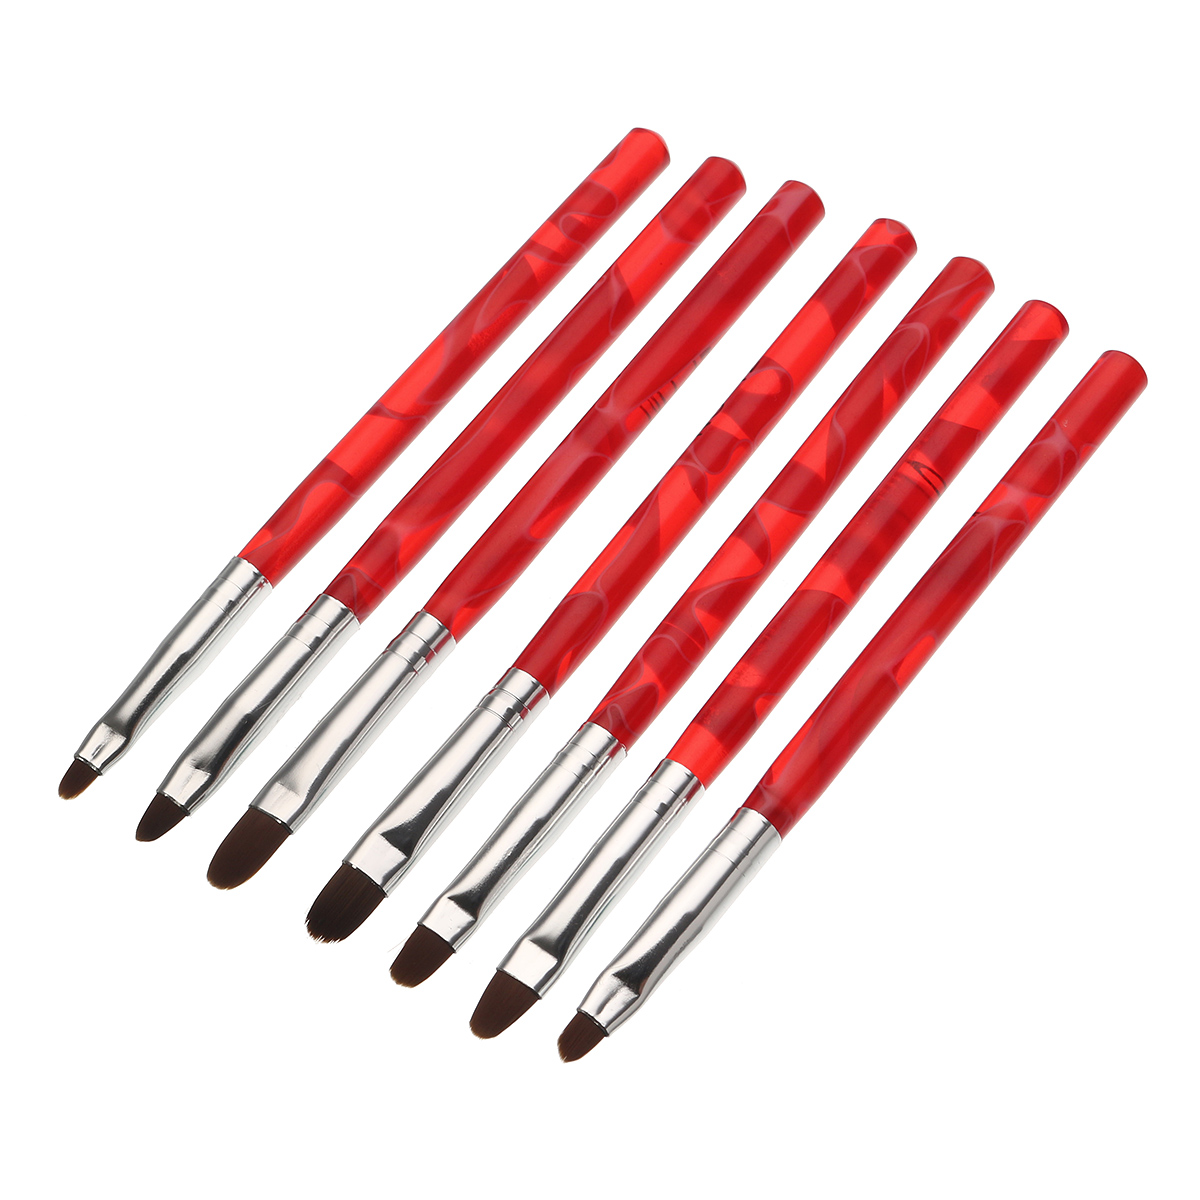 

DANCINGNAIL 7Pcs Red UV Gel Nail Art Brush Set Drawing Acrylic Painting Pen Polish Builder Brushes